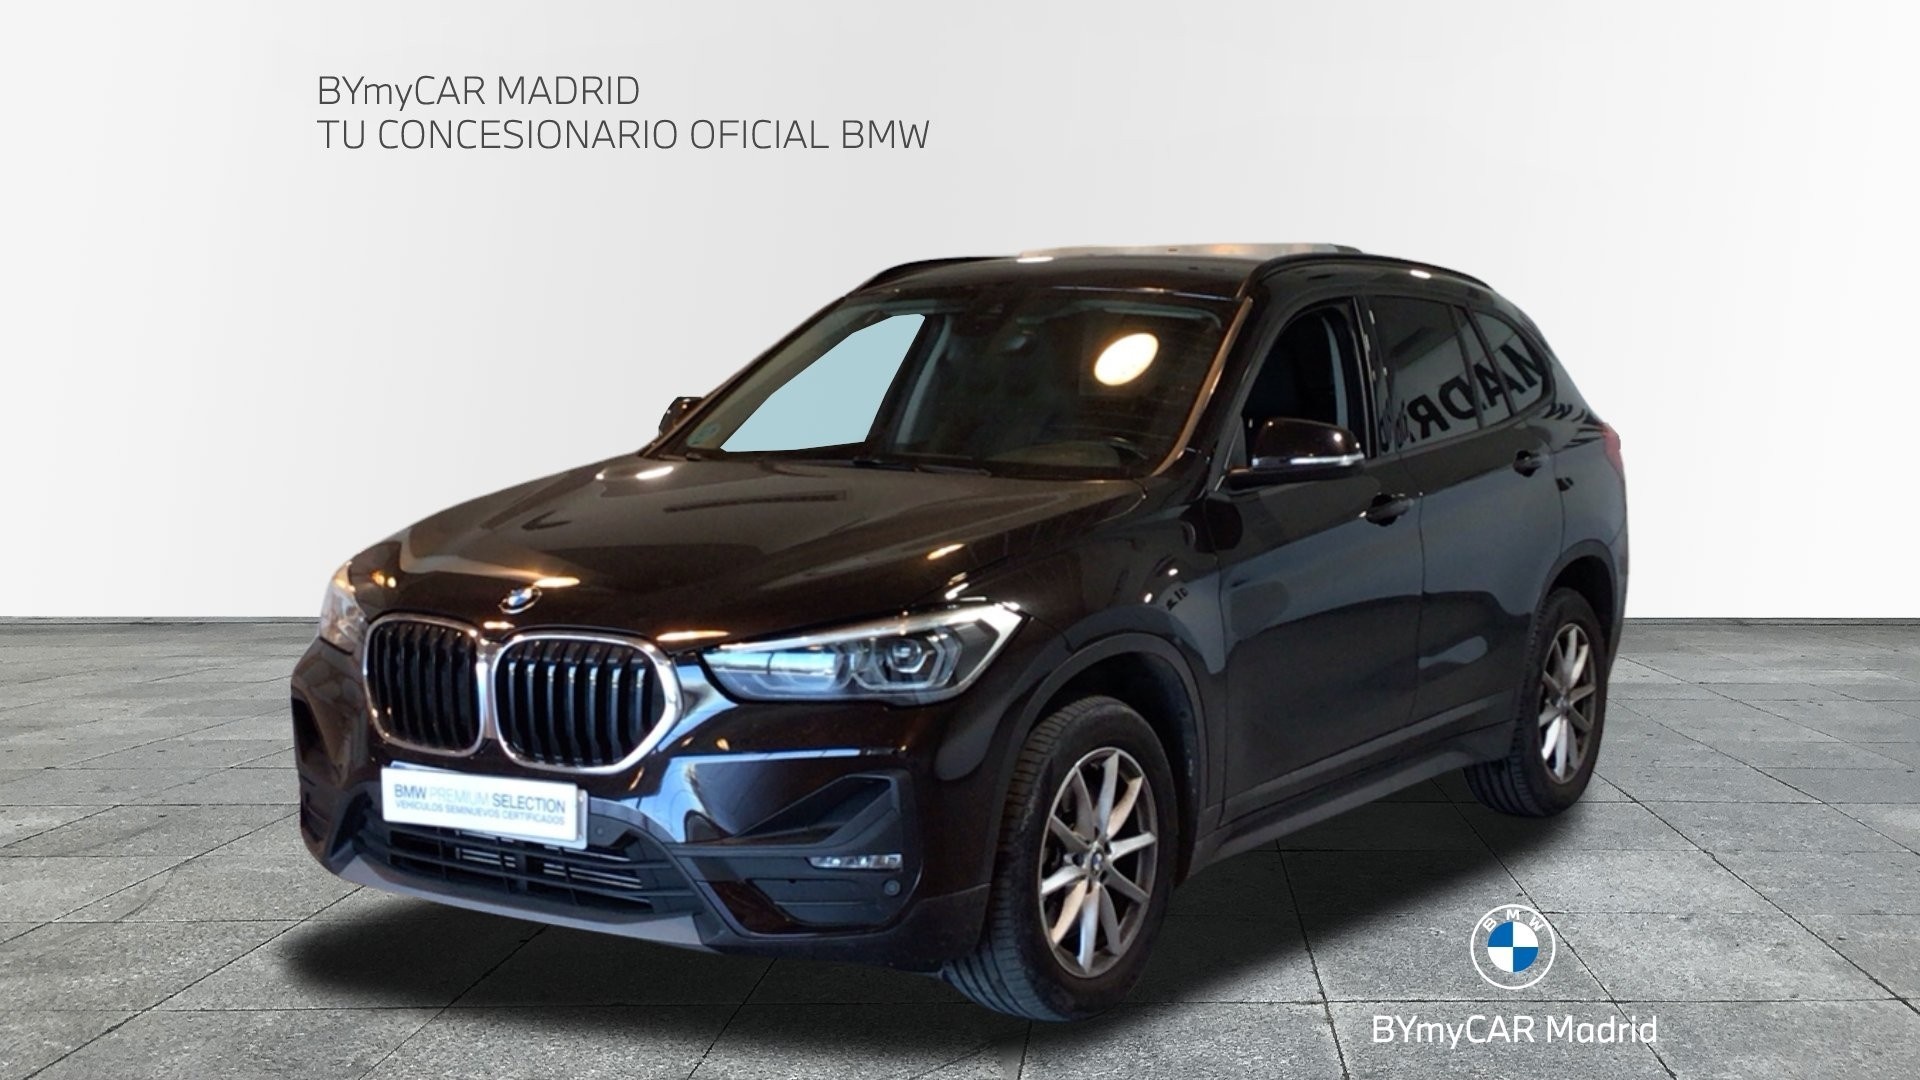 BMW X1 sDrive20d 140 kW (190 CV) Vehículo usado en Madrid - 1